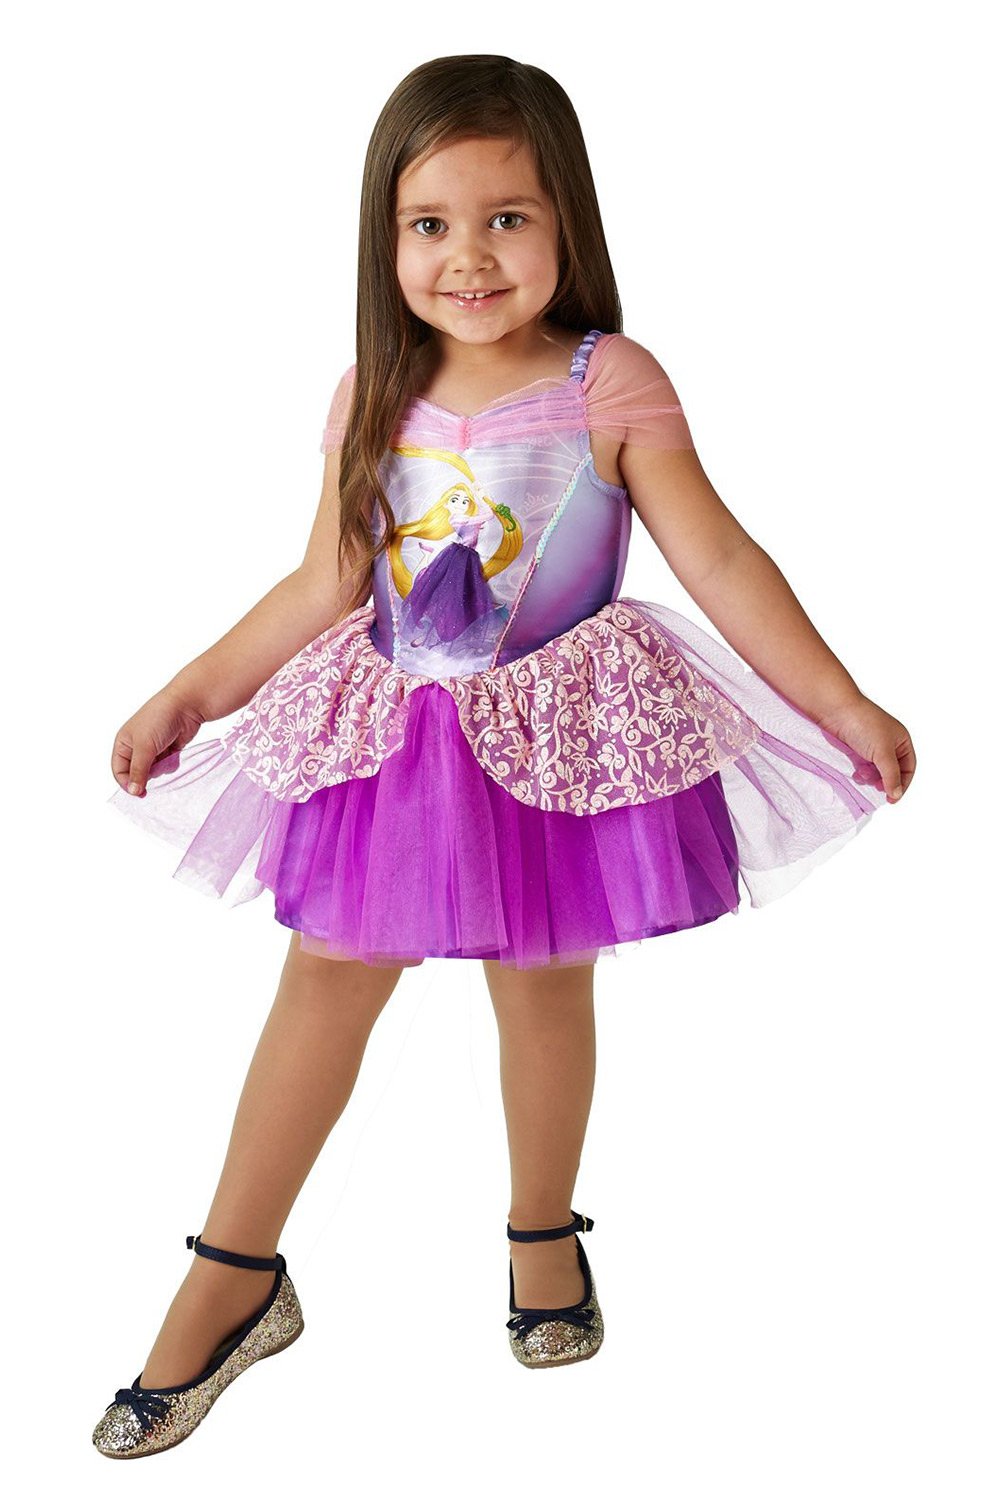 Rubies-Costumes-Disney-Tangled-Rapunzel-Princess-Ballerina